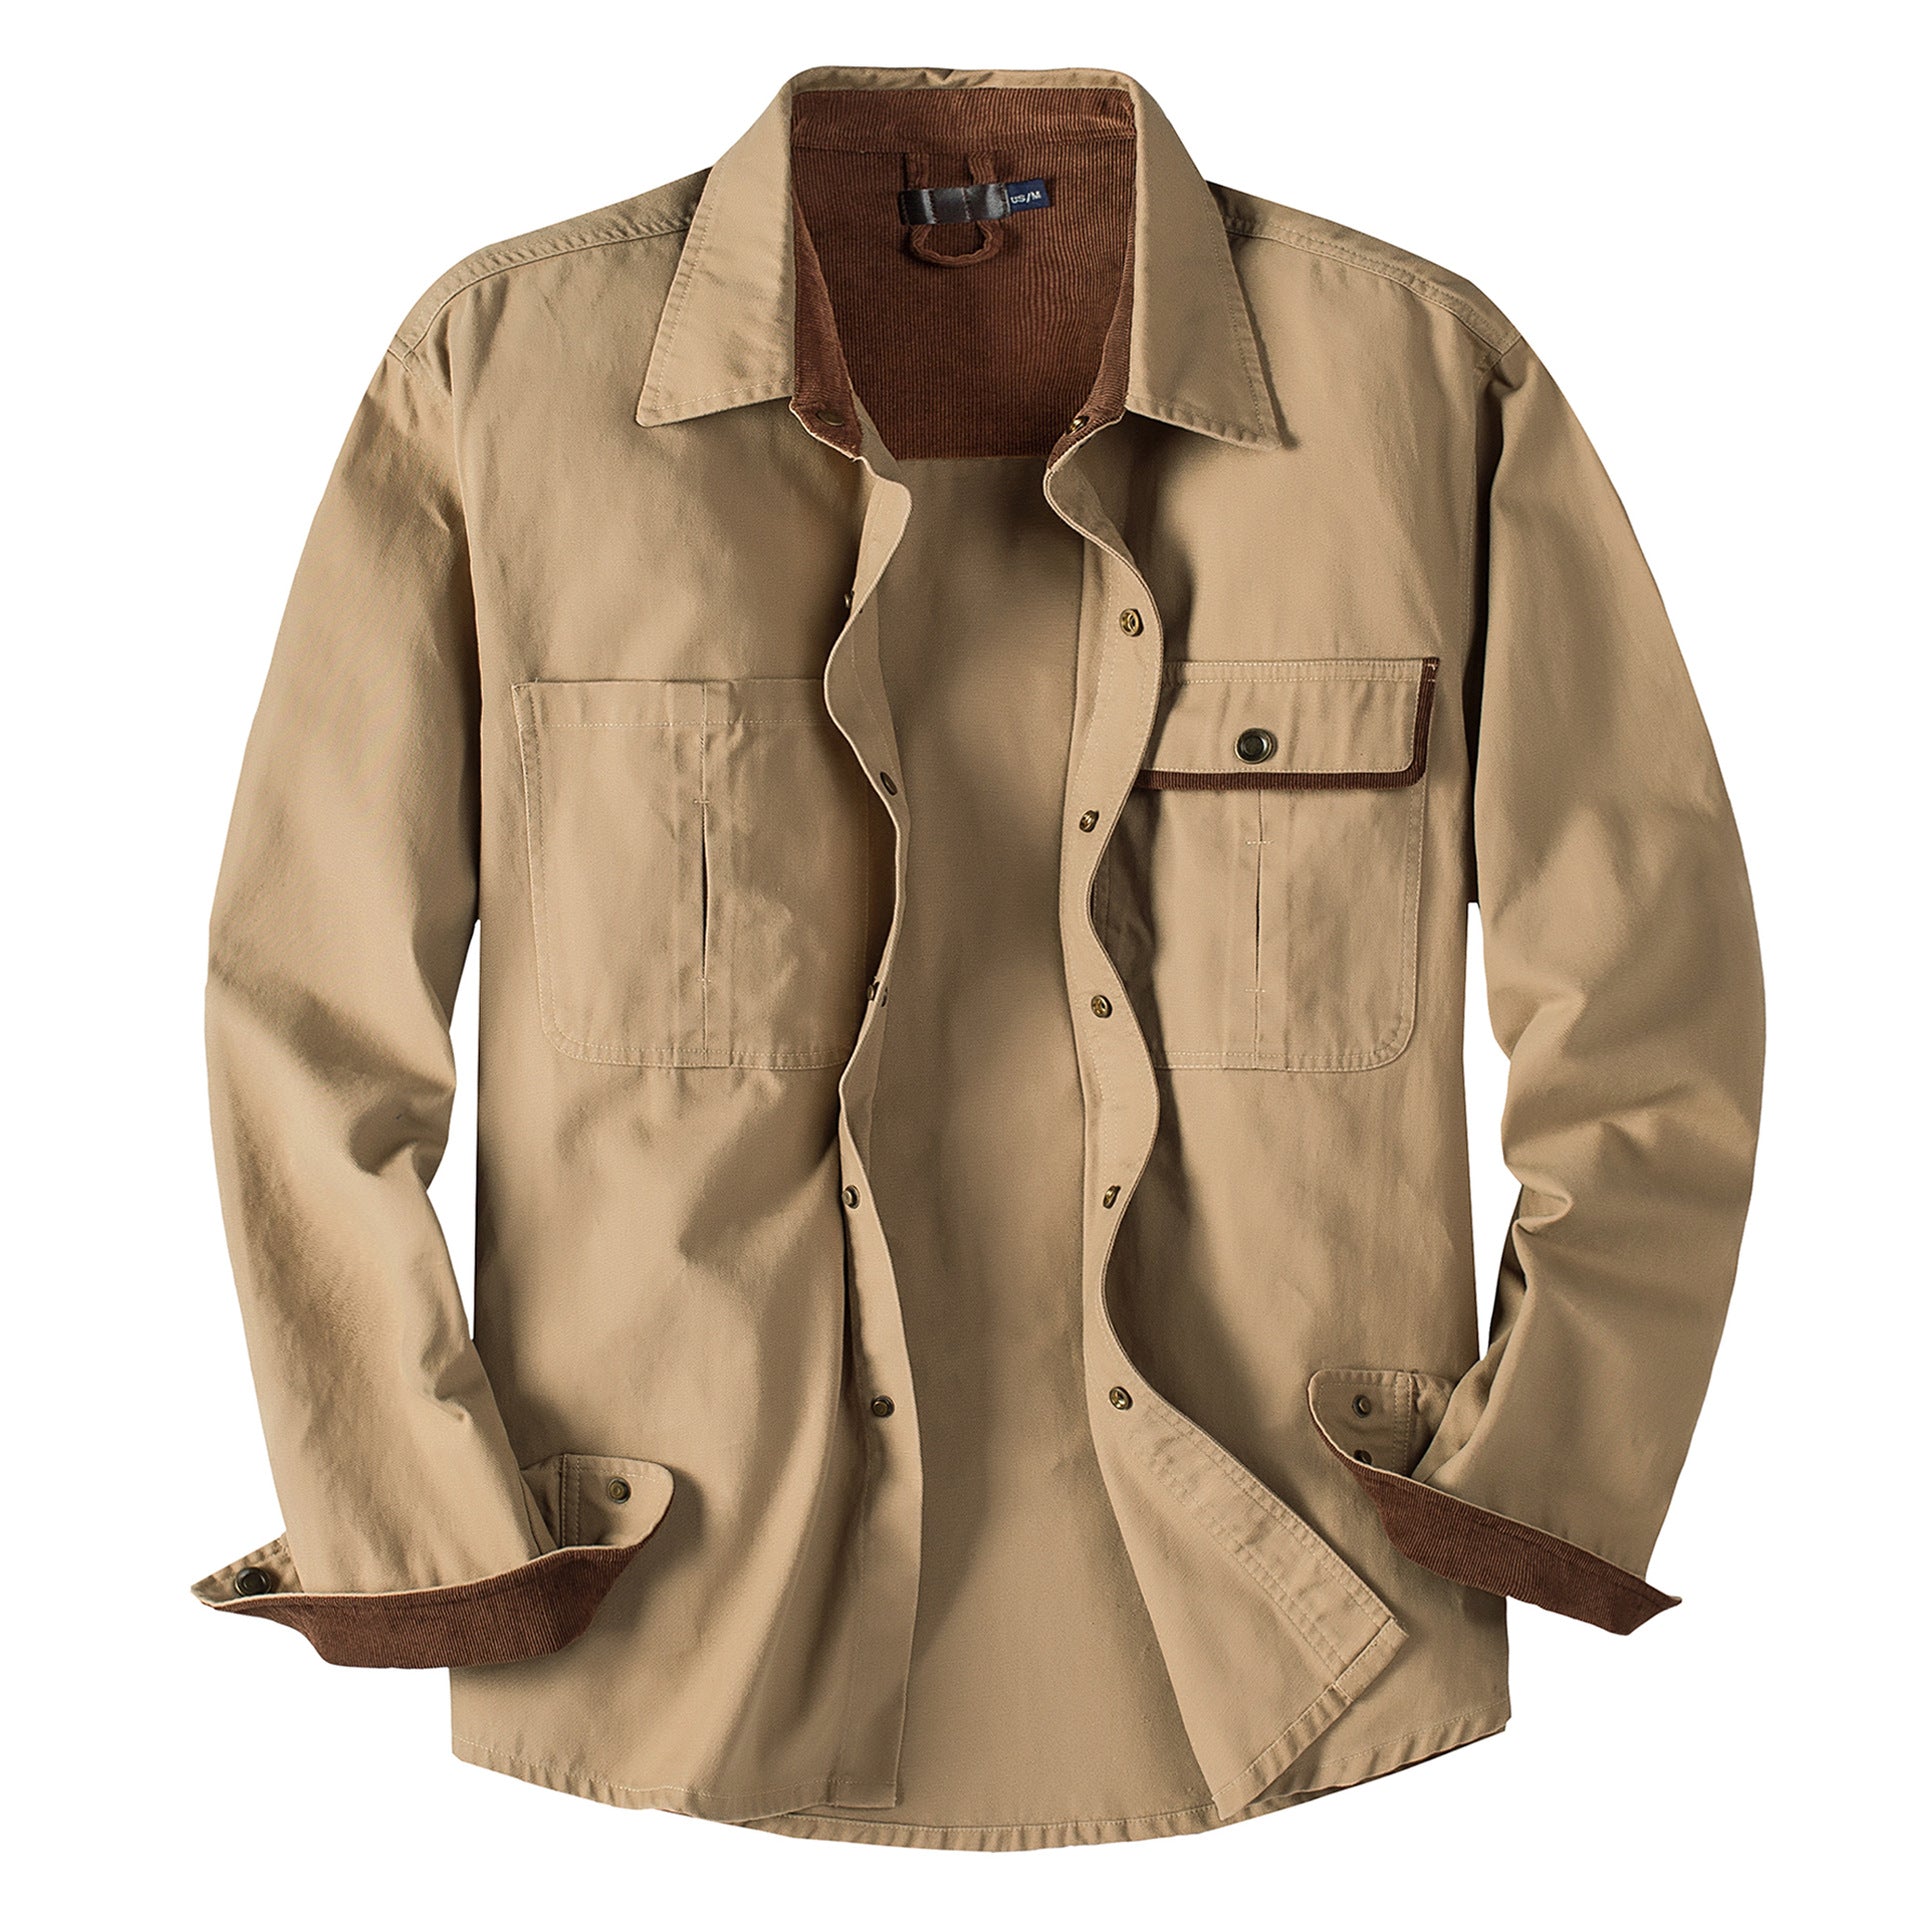 Casual Cotton Plus Sizes Long Sleeves Shirts for Men-Shirts & Tops-Khaki-S-Free Shipping Leatheretro